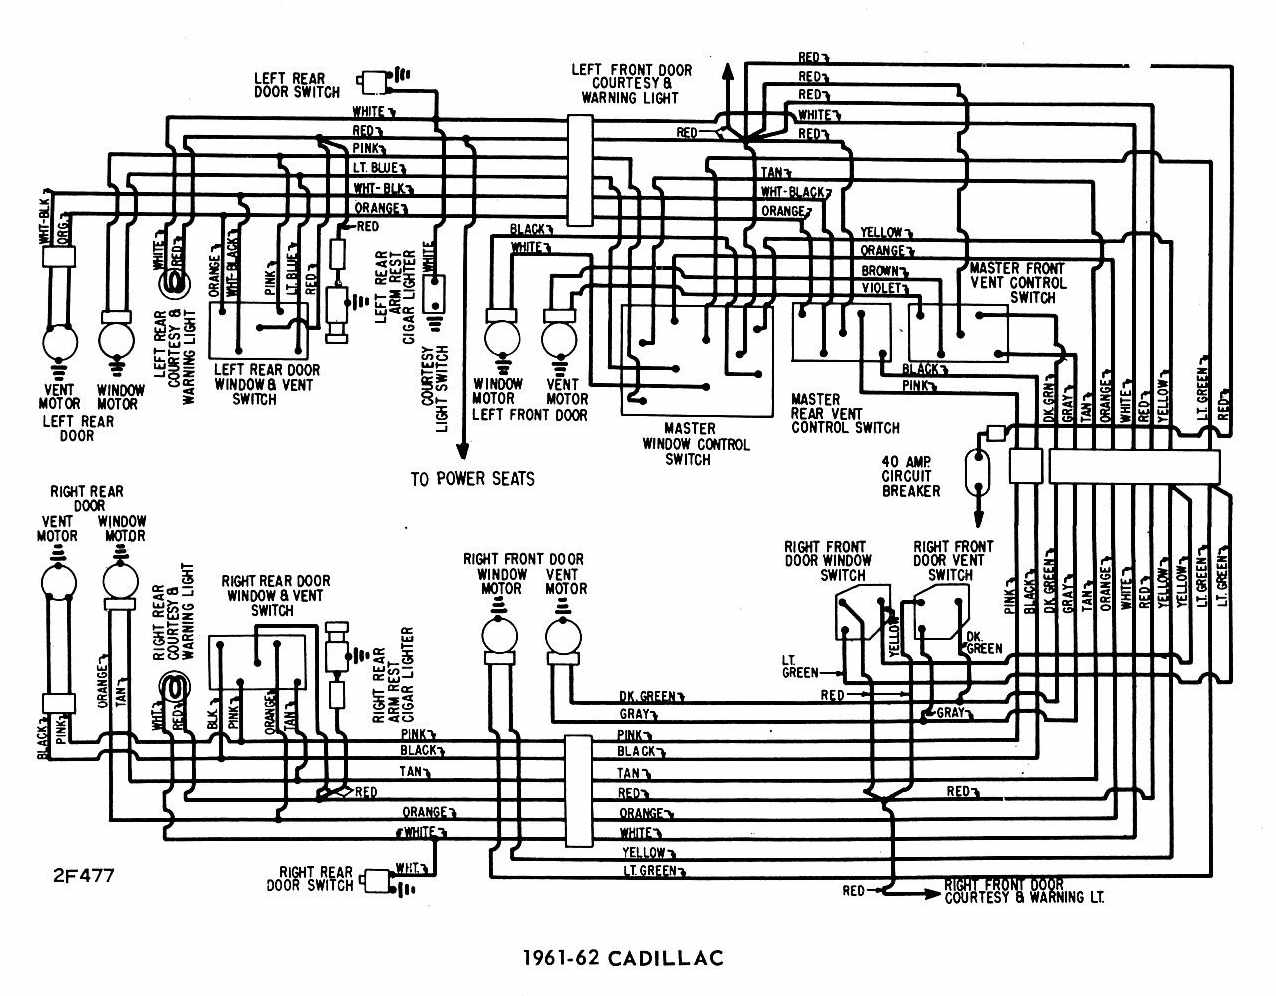 CADILLAC - Car PDF Manual, Wiring Diagram & Fault Codes DTC  2007 Escalade Headlight Wiring Diagram    automotive-manuals.net